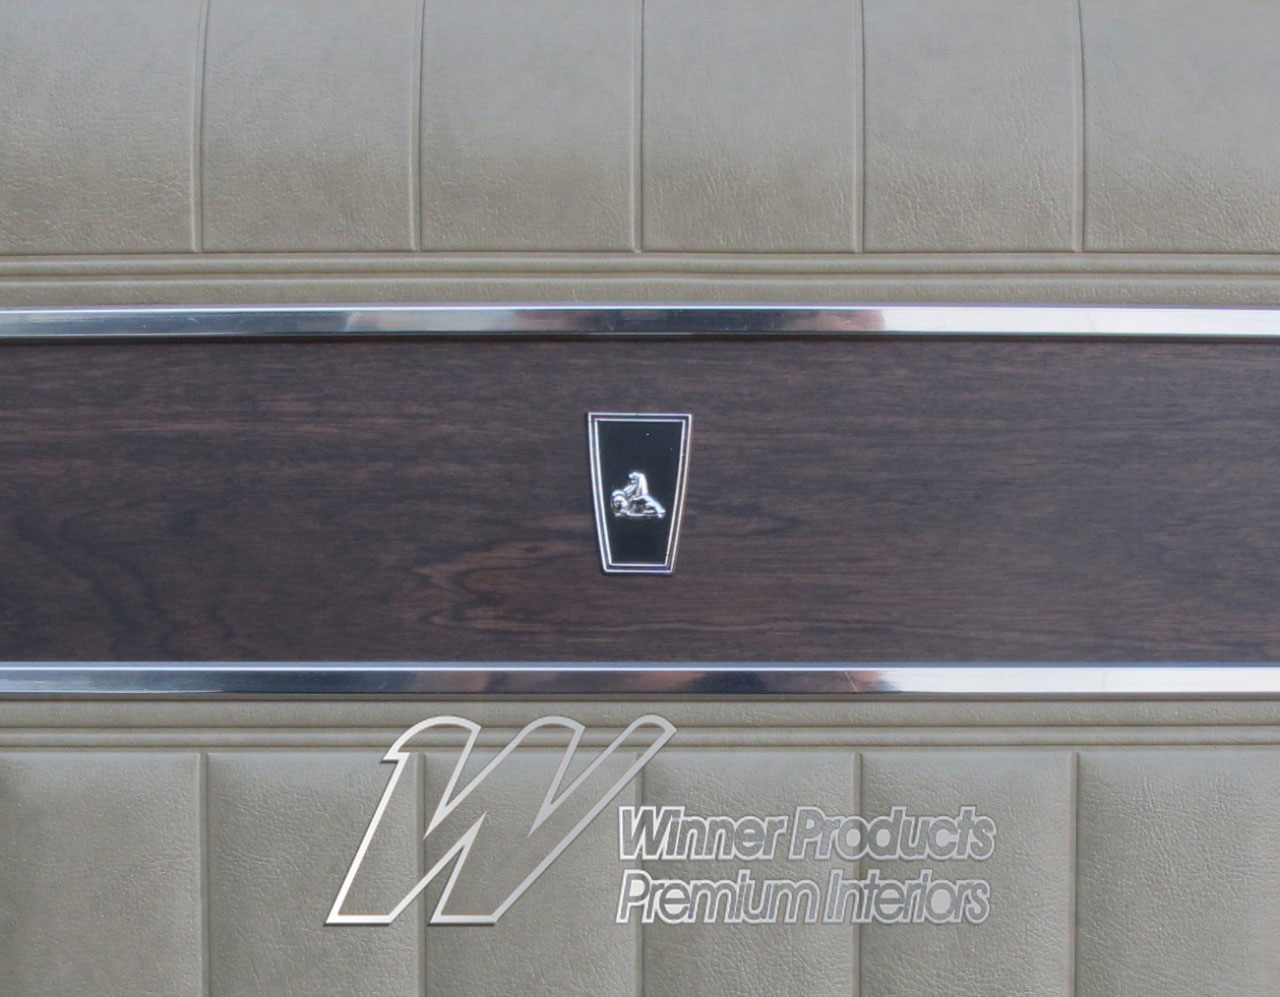 Holden Premier HK Premier Sedan 18S Buckskin Beige & Castillion Weave Door Trims (Image 5 of 5)